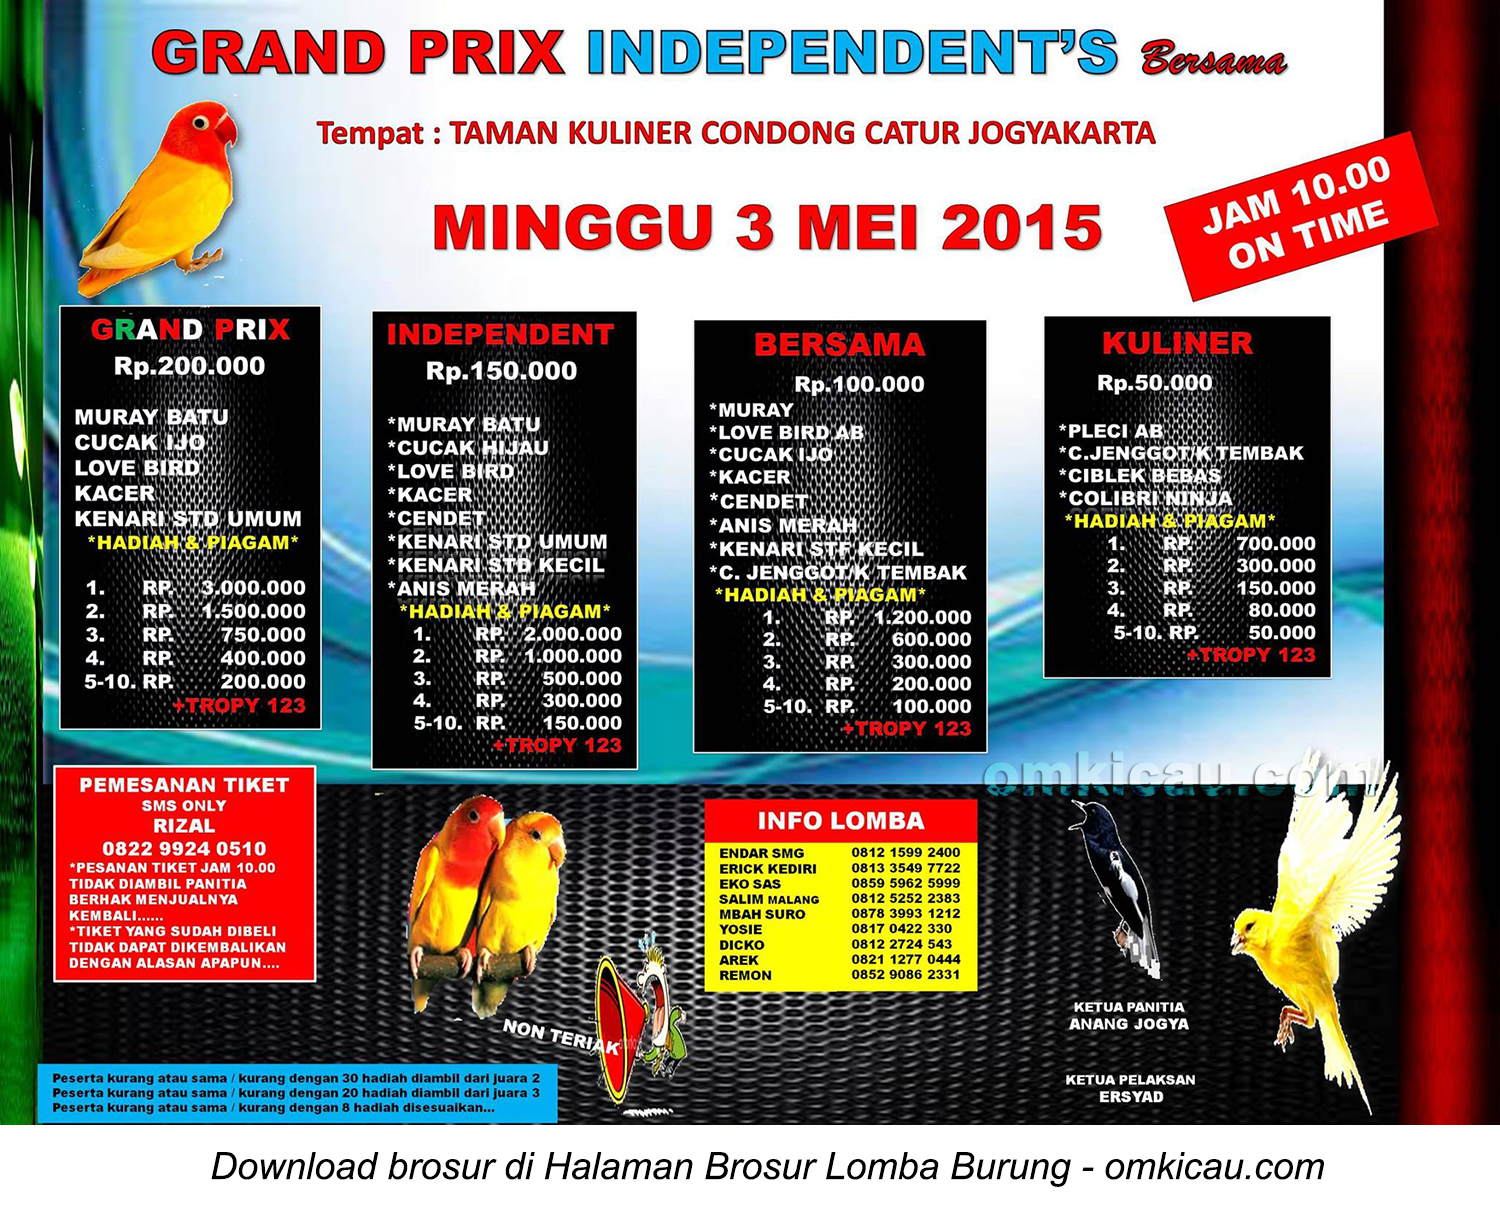 Brosur Lomba Burung Berkicau Grand Prix Independent's, Jogja, 3 Mei 2015